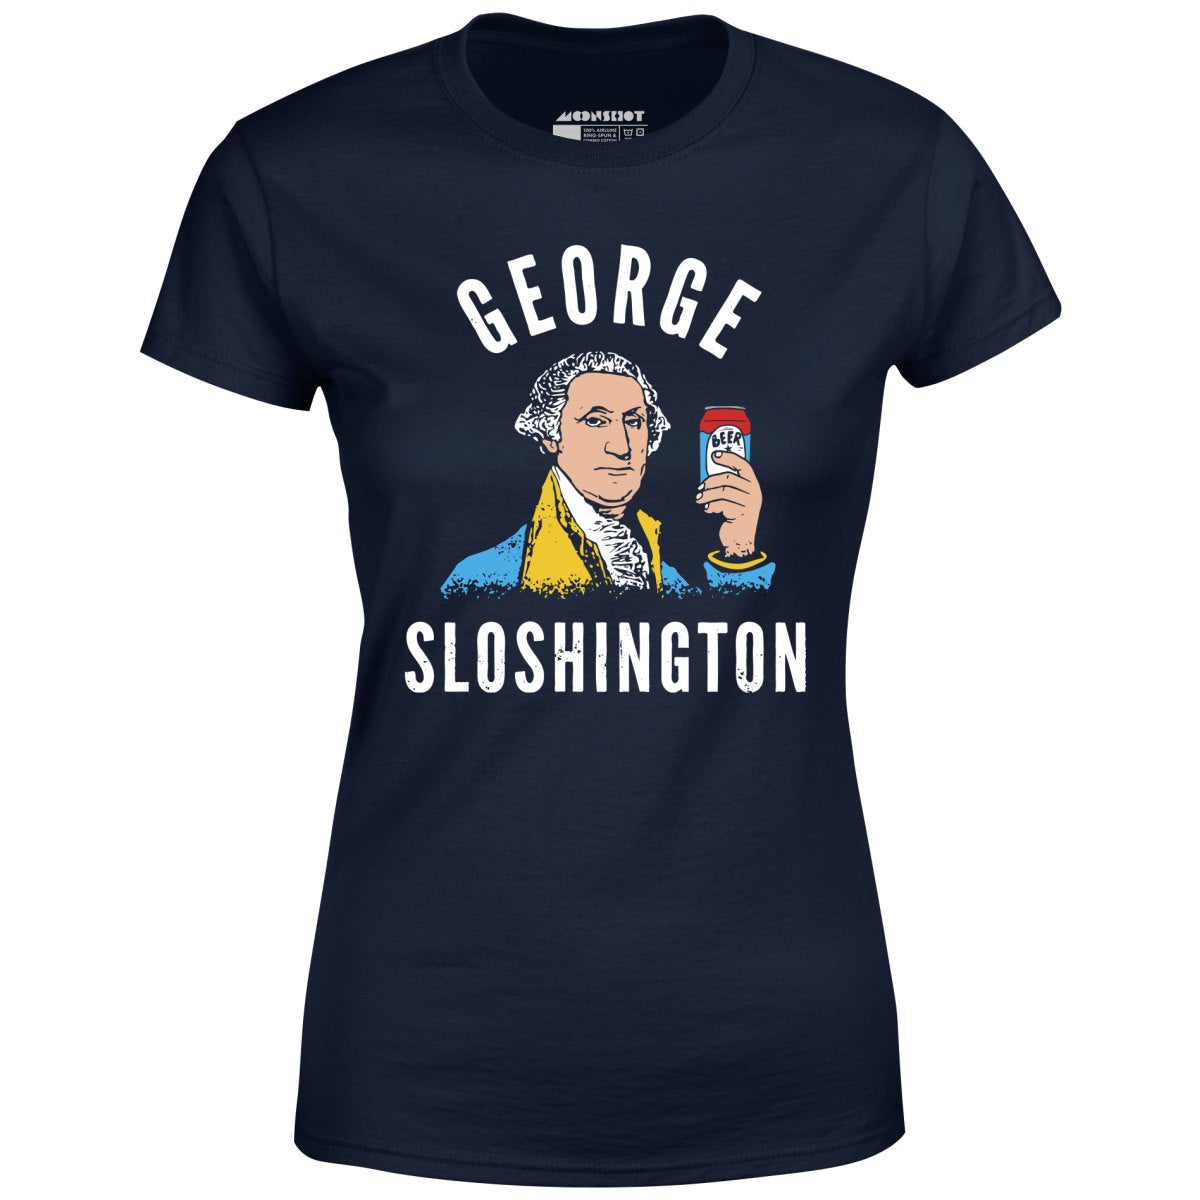 George Sloshington - Women's T-Shirt